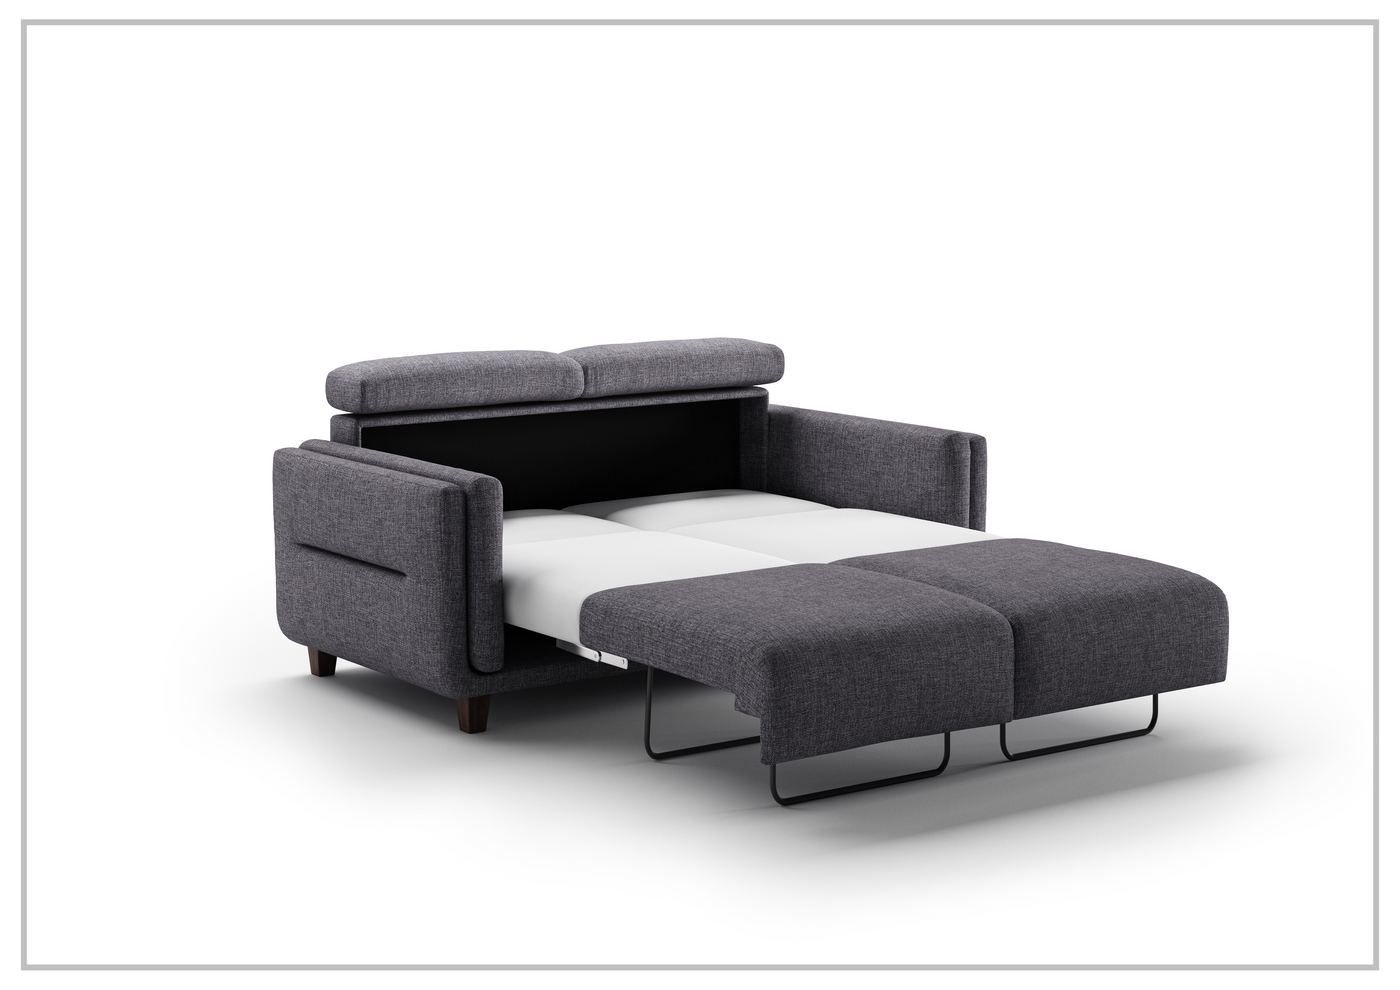 Luonto Paris Fabric Sleeper Sofa with Adjustable Headrests